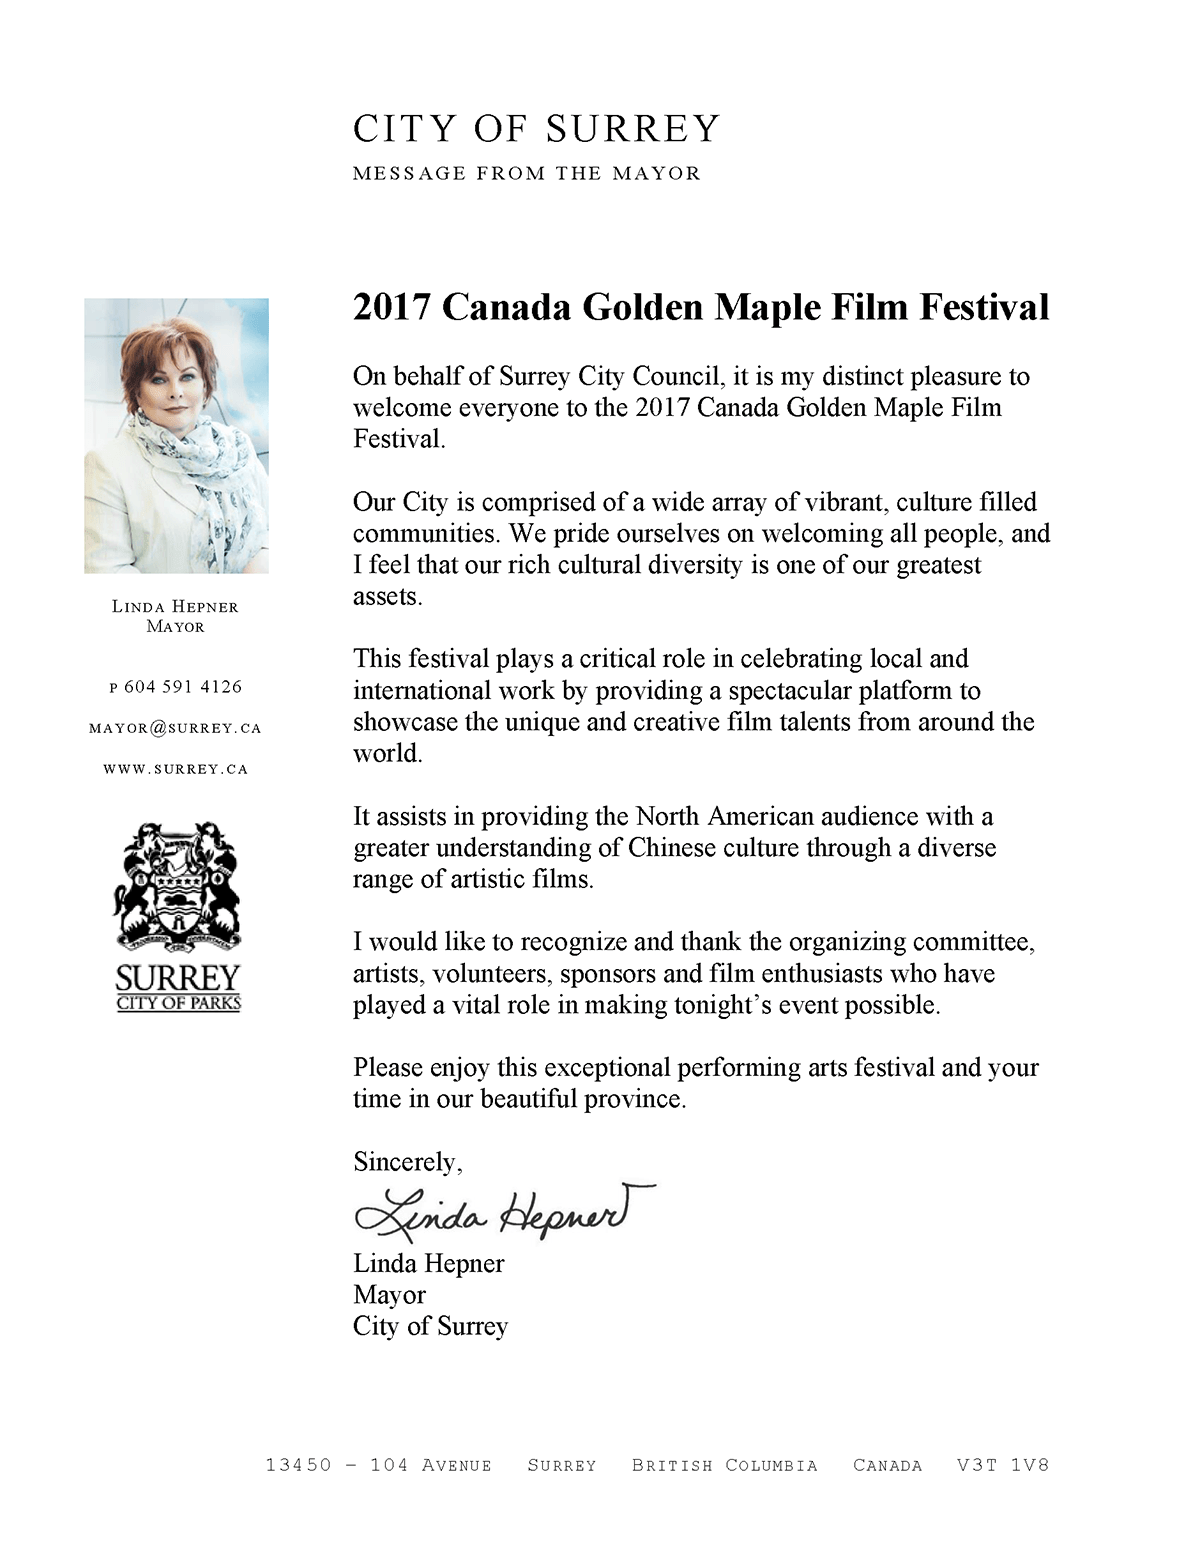 Congratulatory Letter from Linda Hepner, Mayor of Surrey